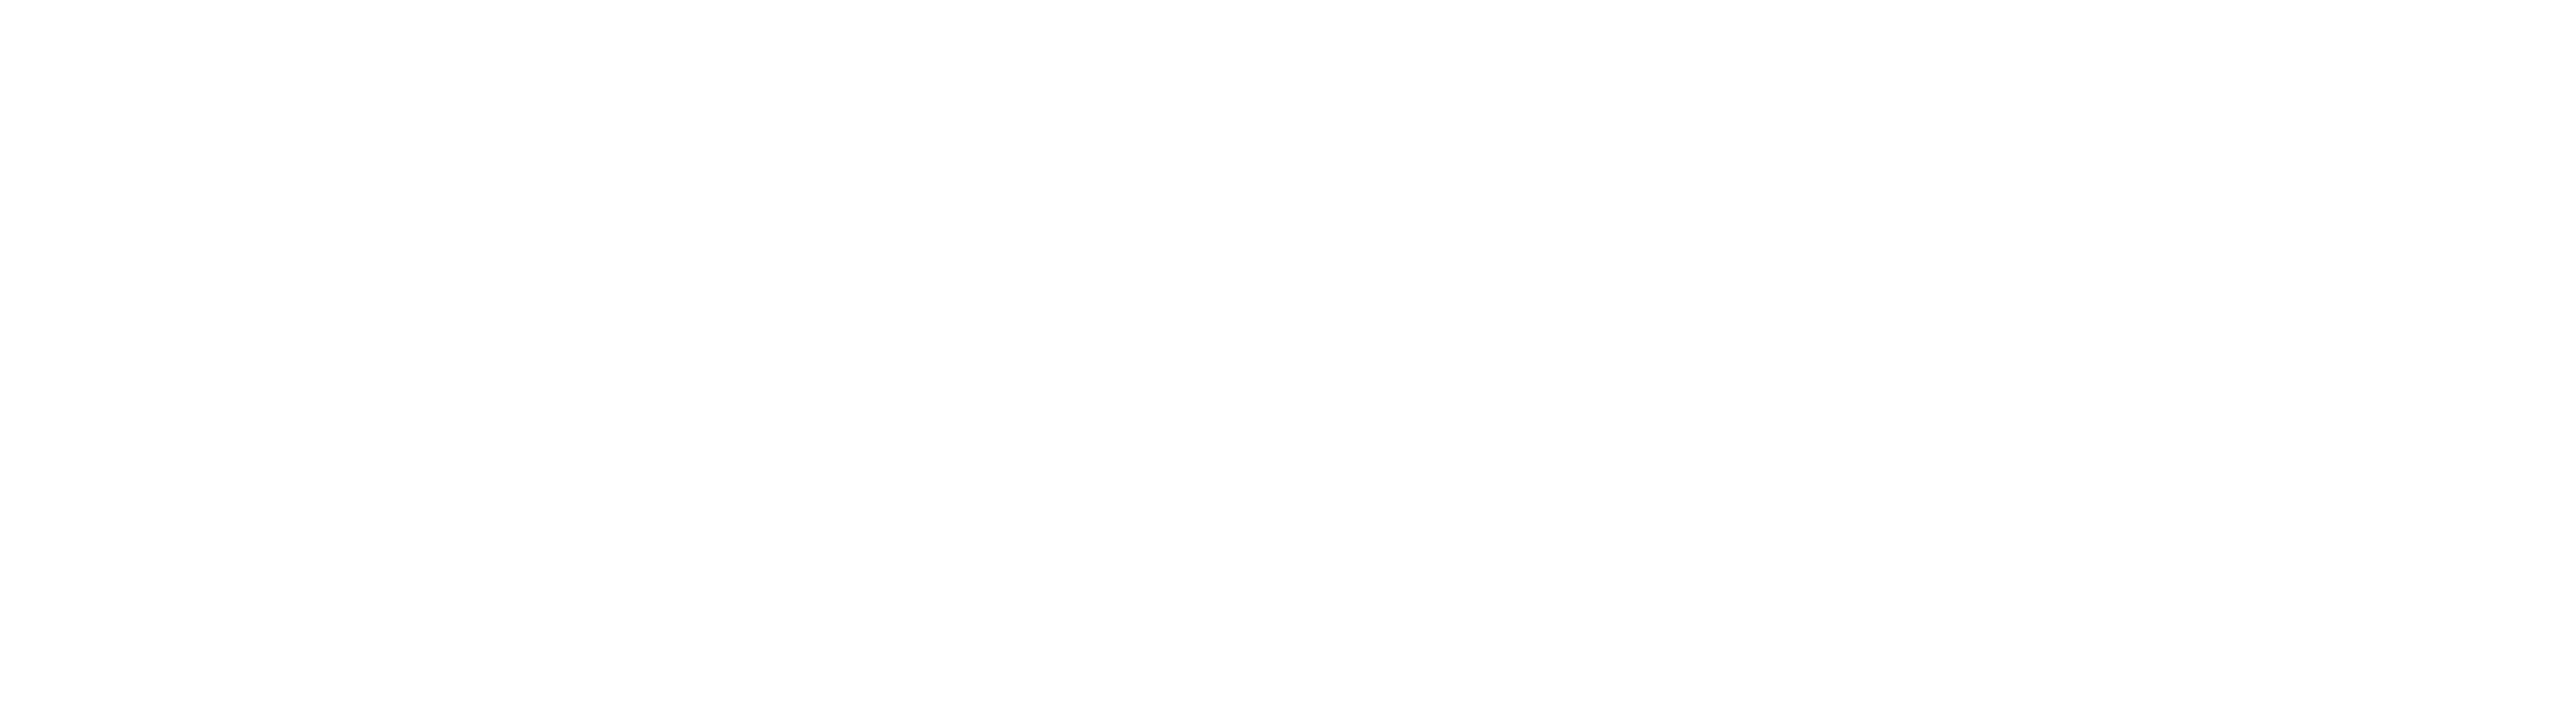 RingCentral_Logo